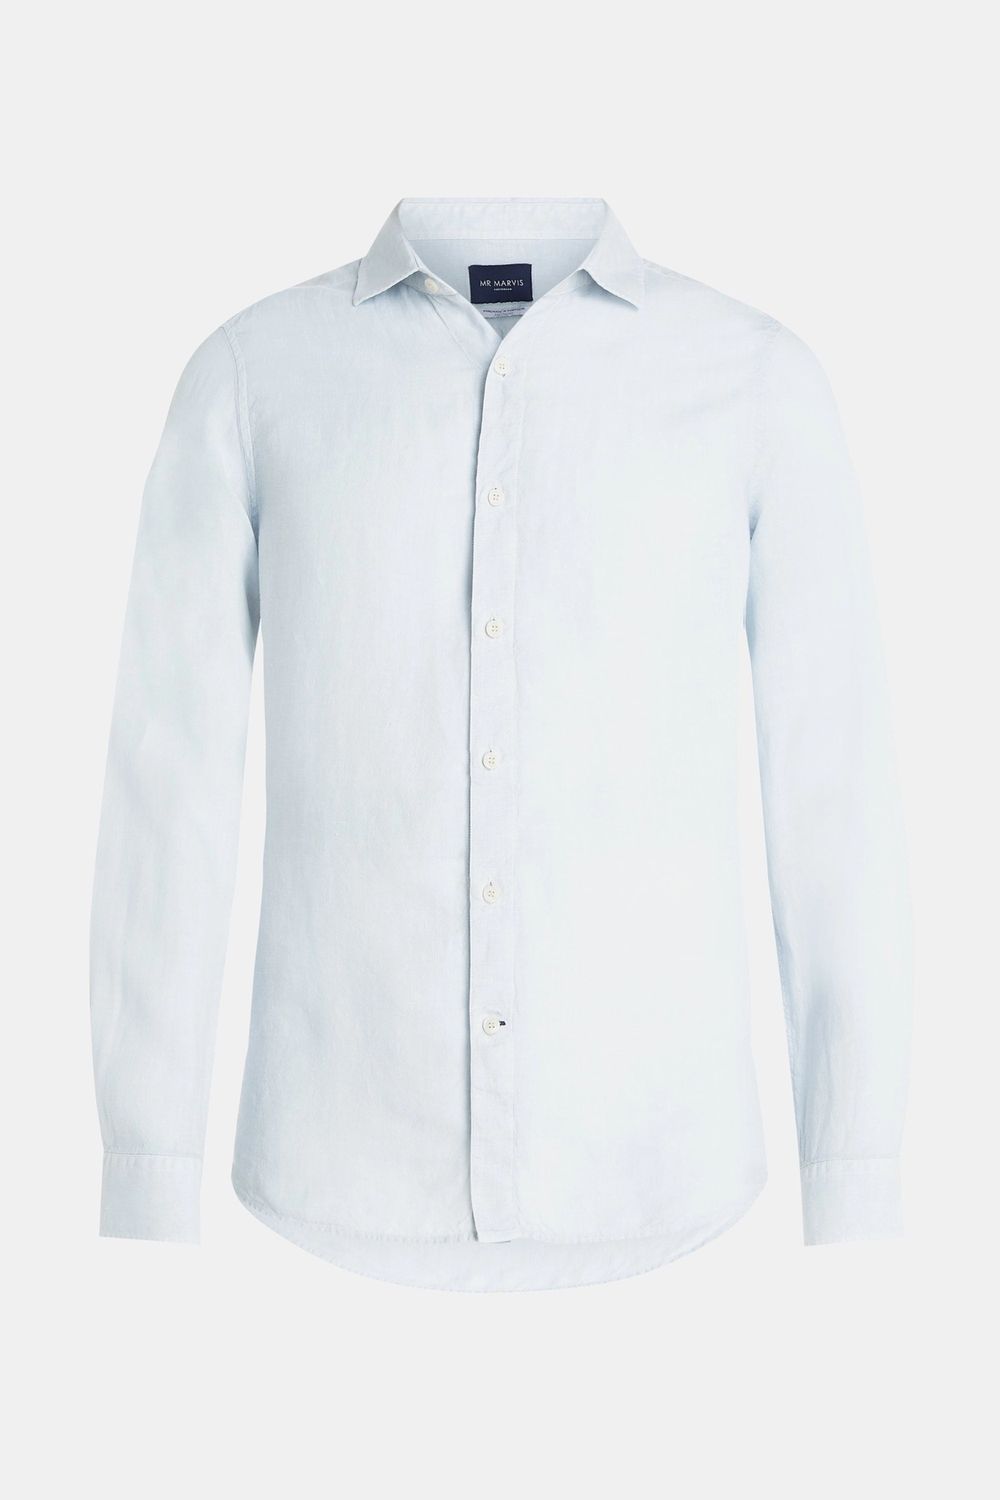 Avenues - The Linen Shirt